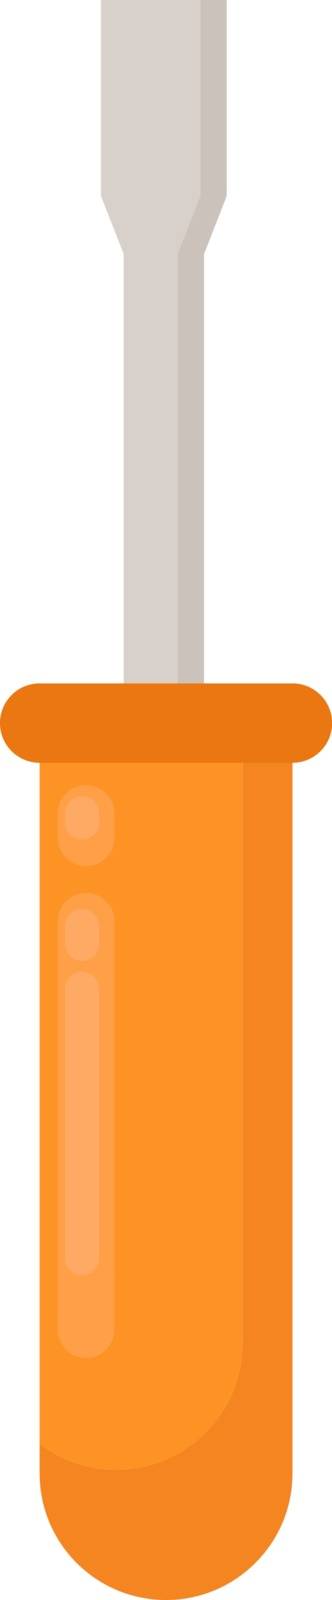 Orange screwdriver, illustration, vector on white background by Morphart